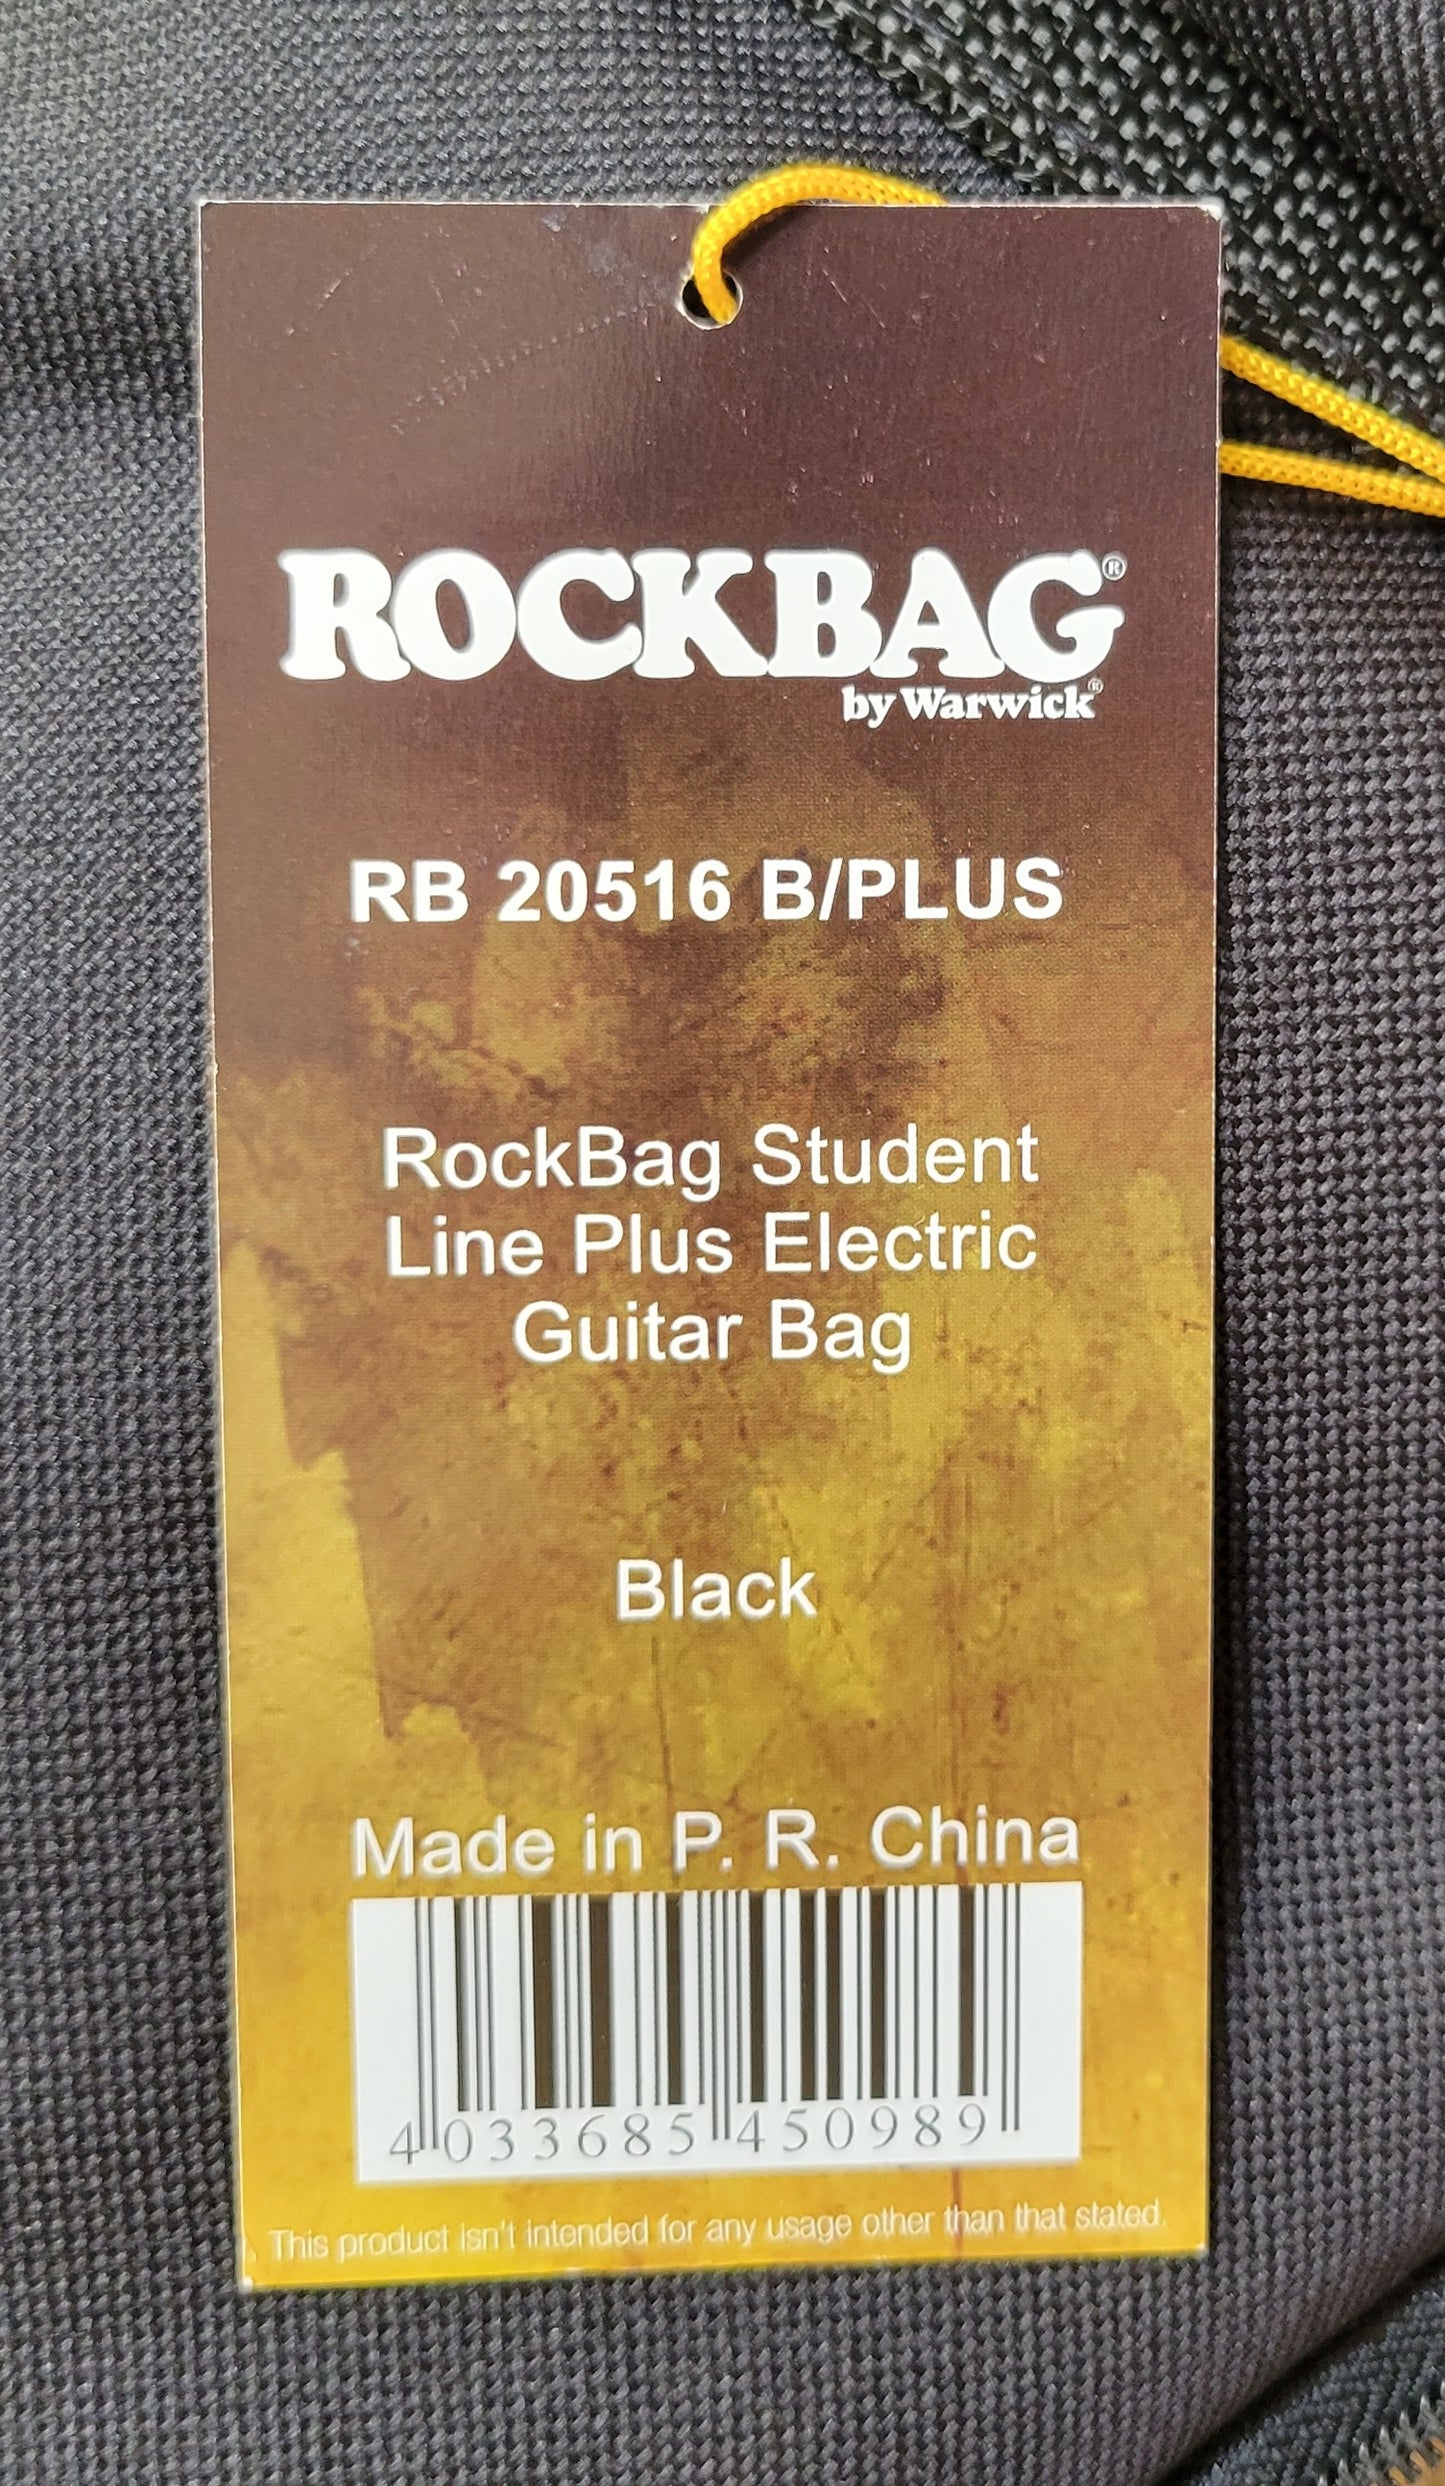 Framus D-Series Panthera Pro 7-String Electric Guitar, Nirvana Black Transparent High Polish, Gigbag